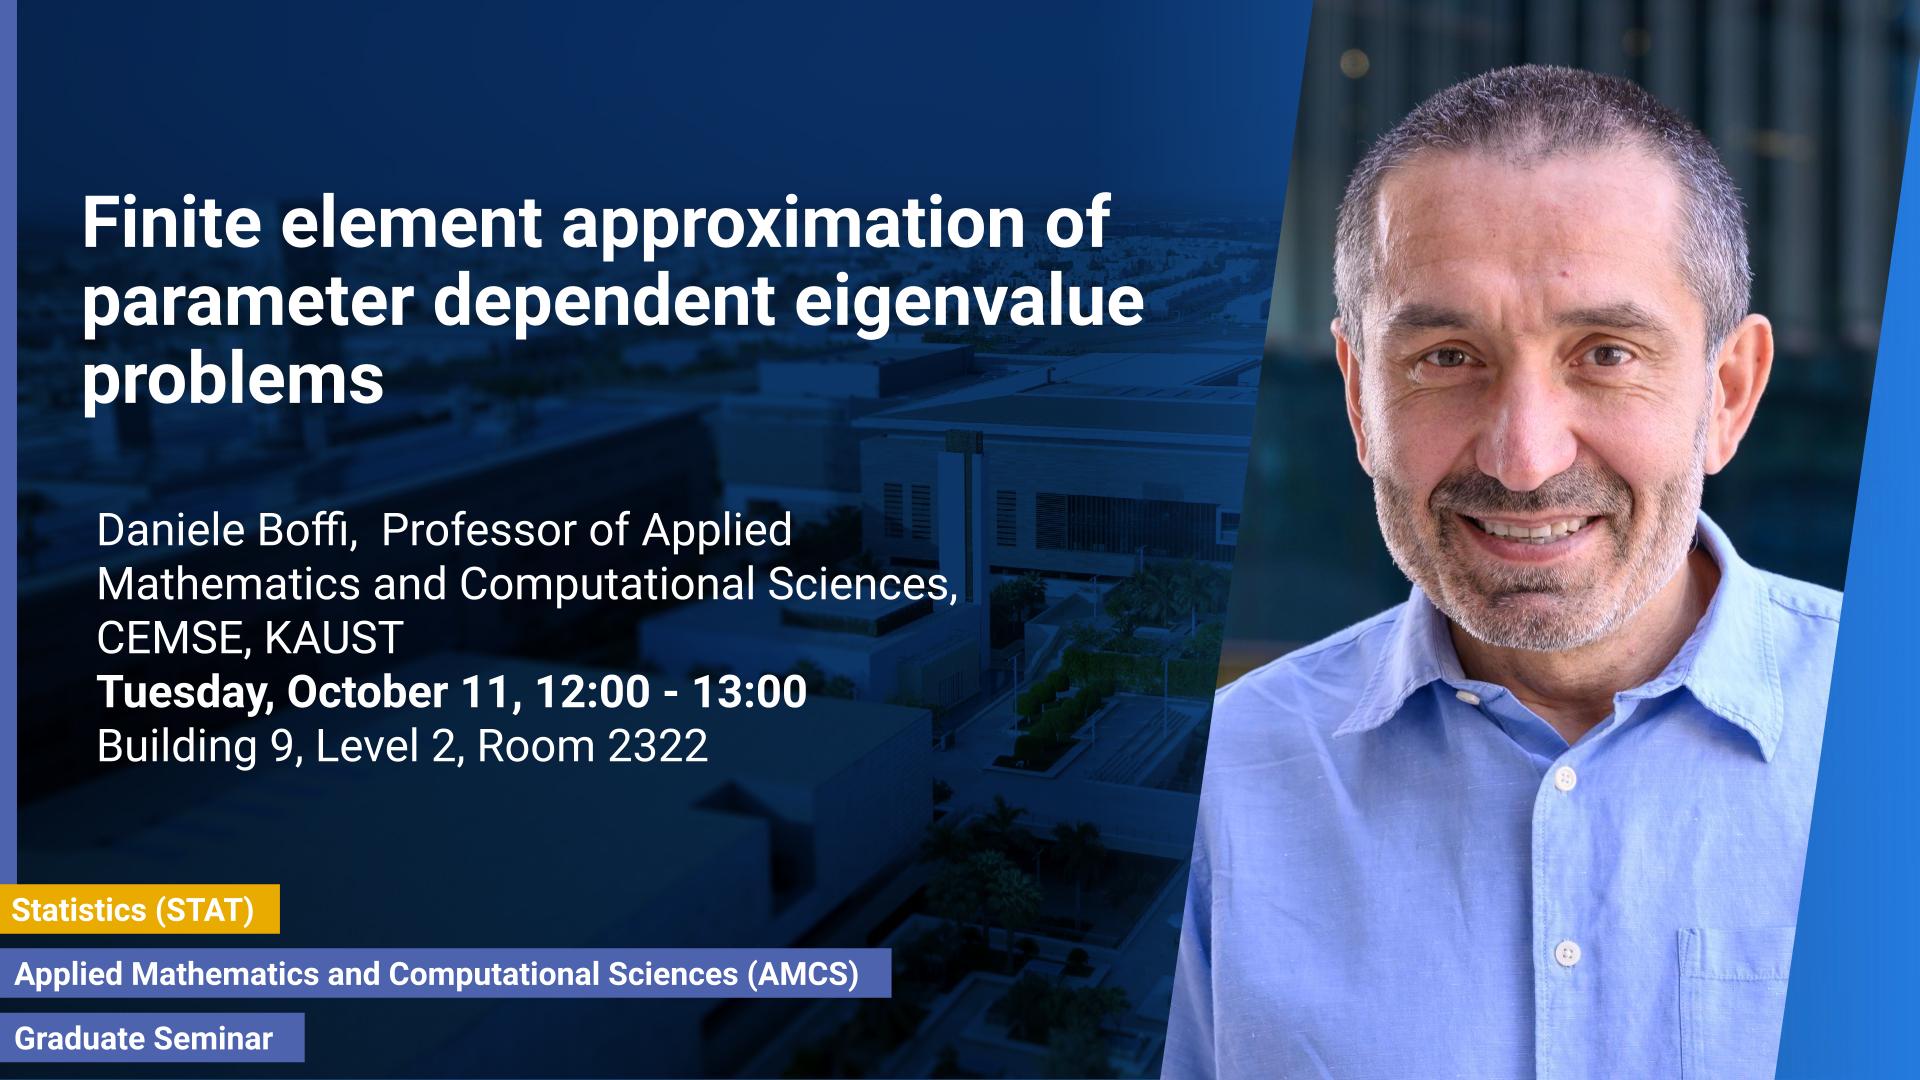 KAUST-CEMSE-STAT-AMCS-Seminar-Daniele Boffi-Finite-element-approximation-of parameter-dependent-eigenvalue problems